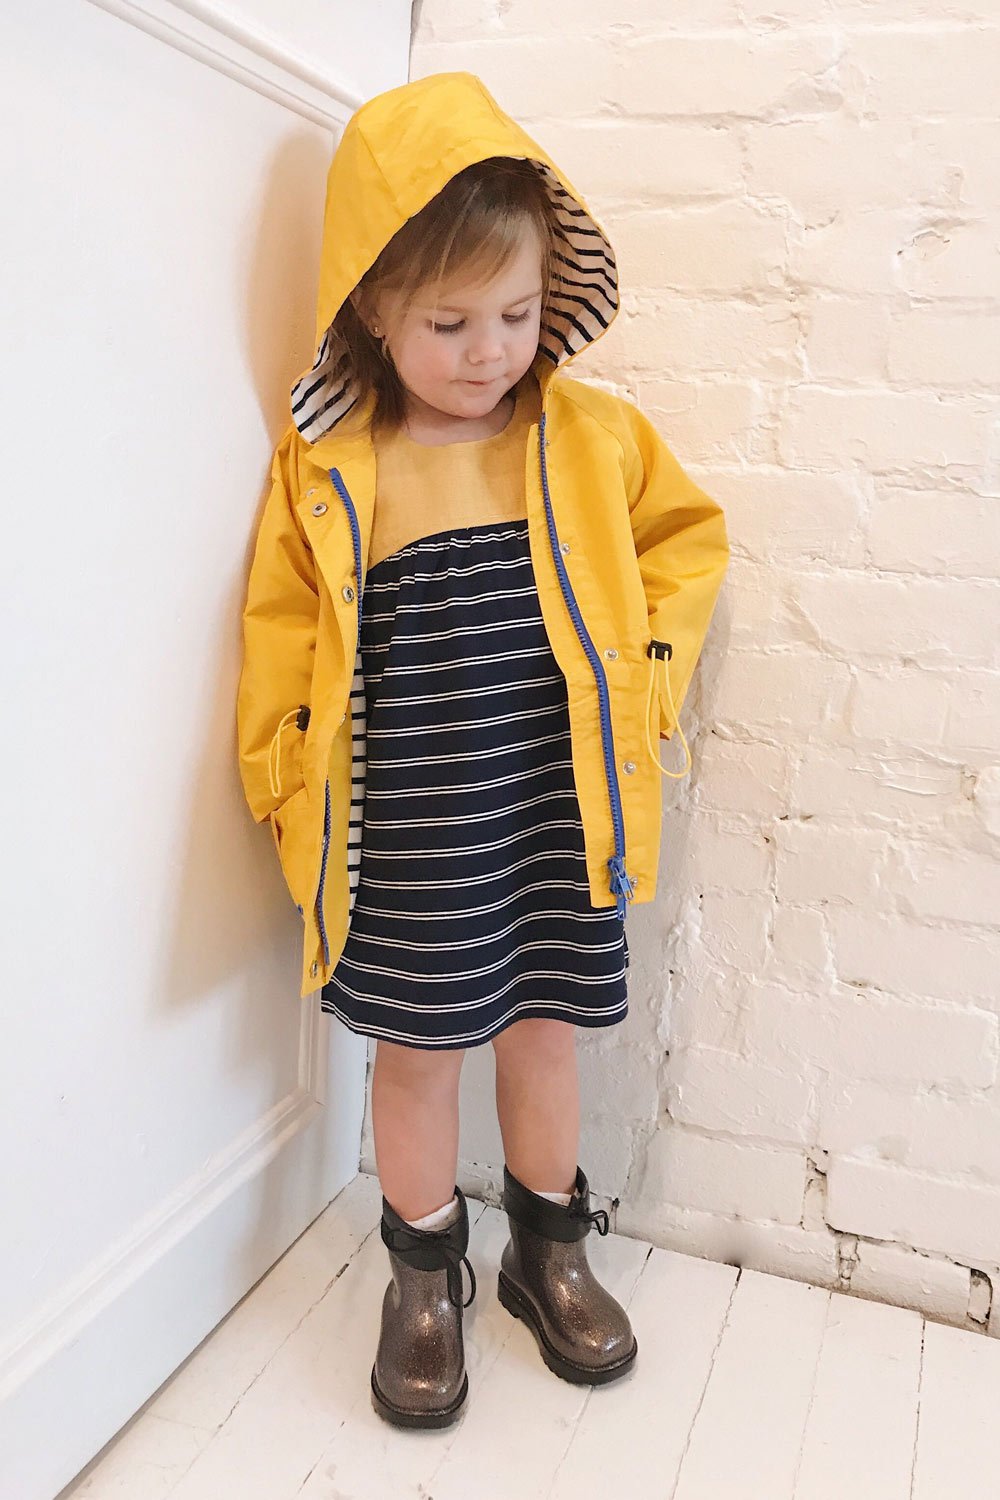 Noville Mini Yellow Kids Hooded Rain Jacket | La Petite Garçonne on model